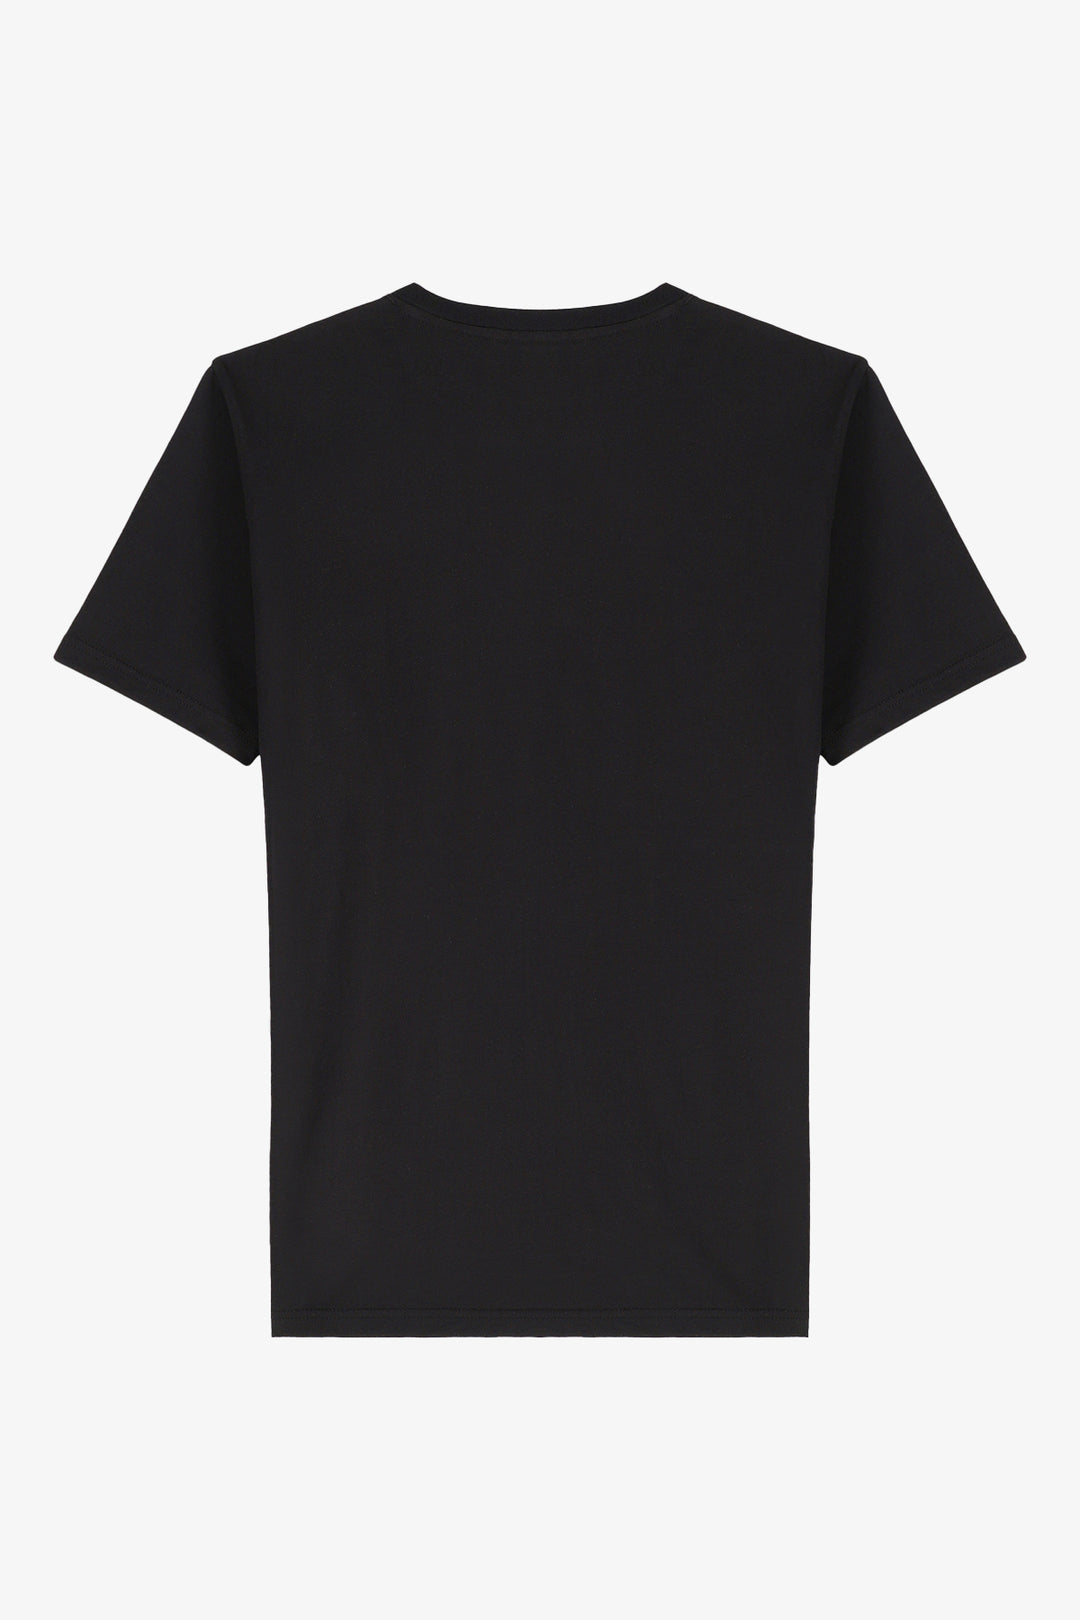 Black Tri-Color Graphic Printed T-Shirt - A24 - MT0321R